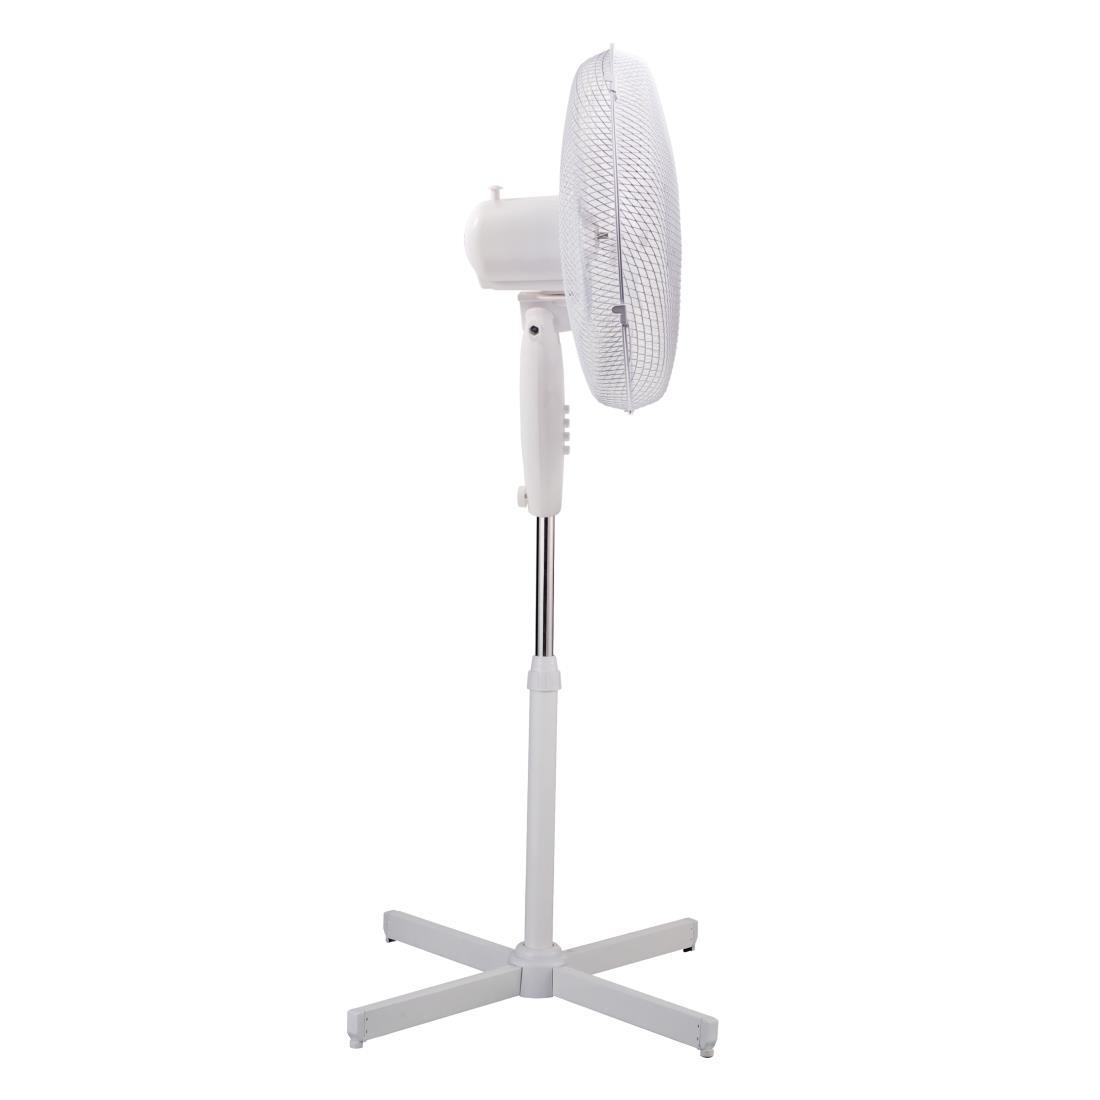 Igenix 16" Oscillating White Stand Fan - GR389  - 3